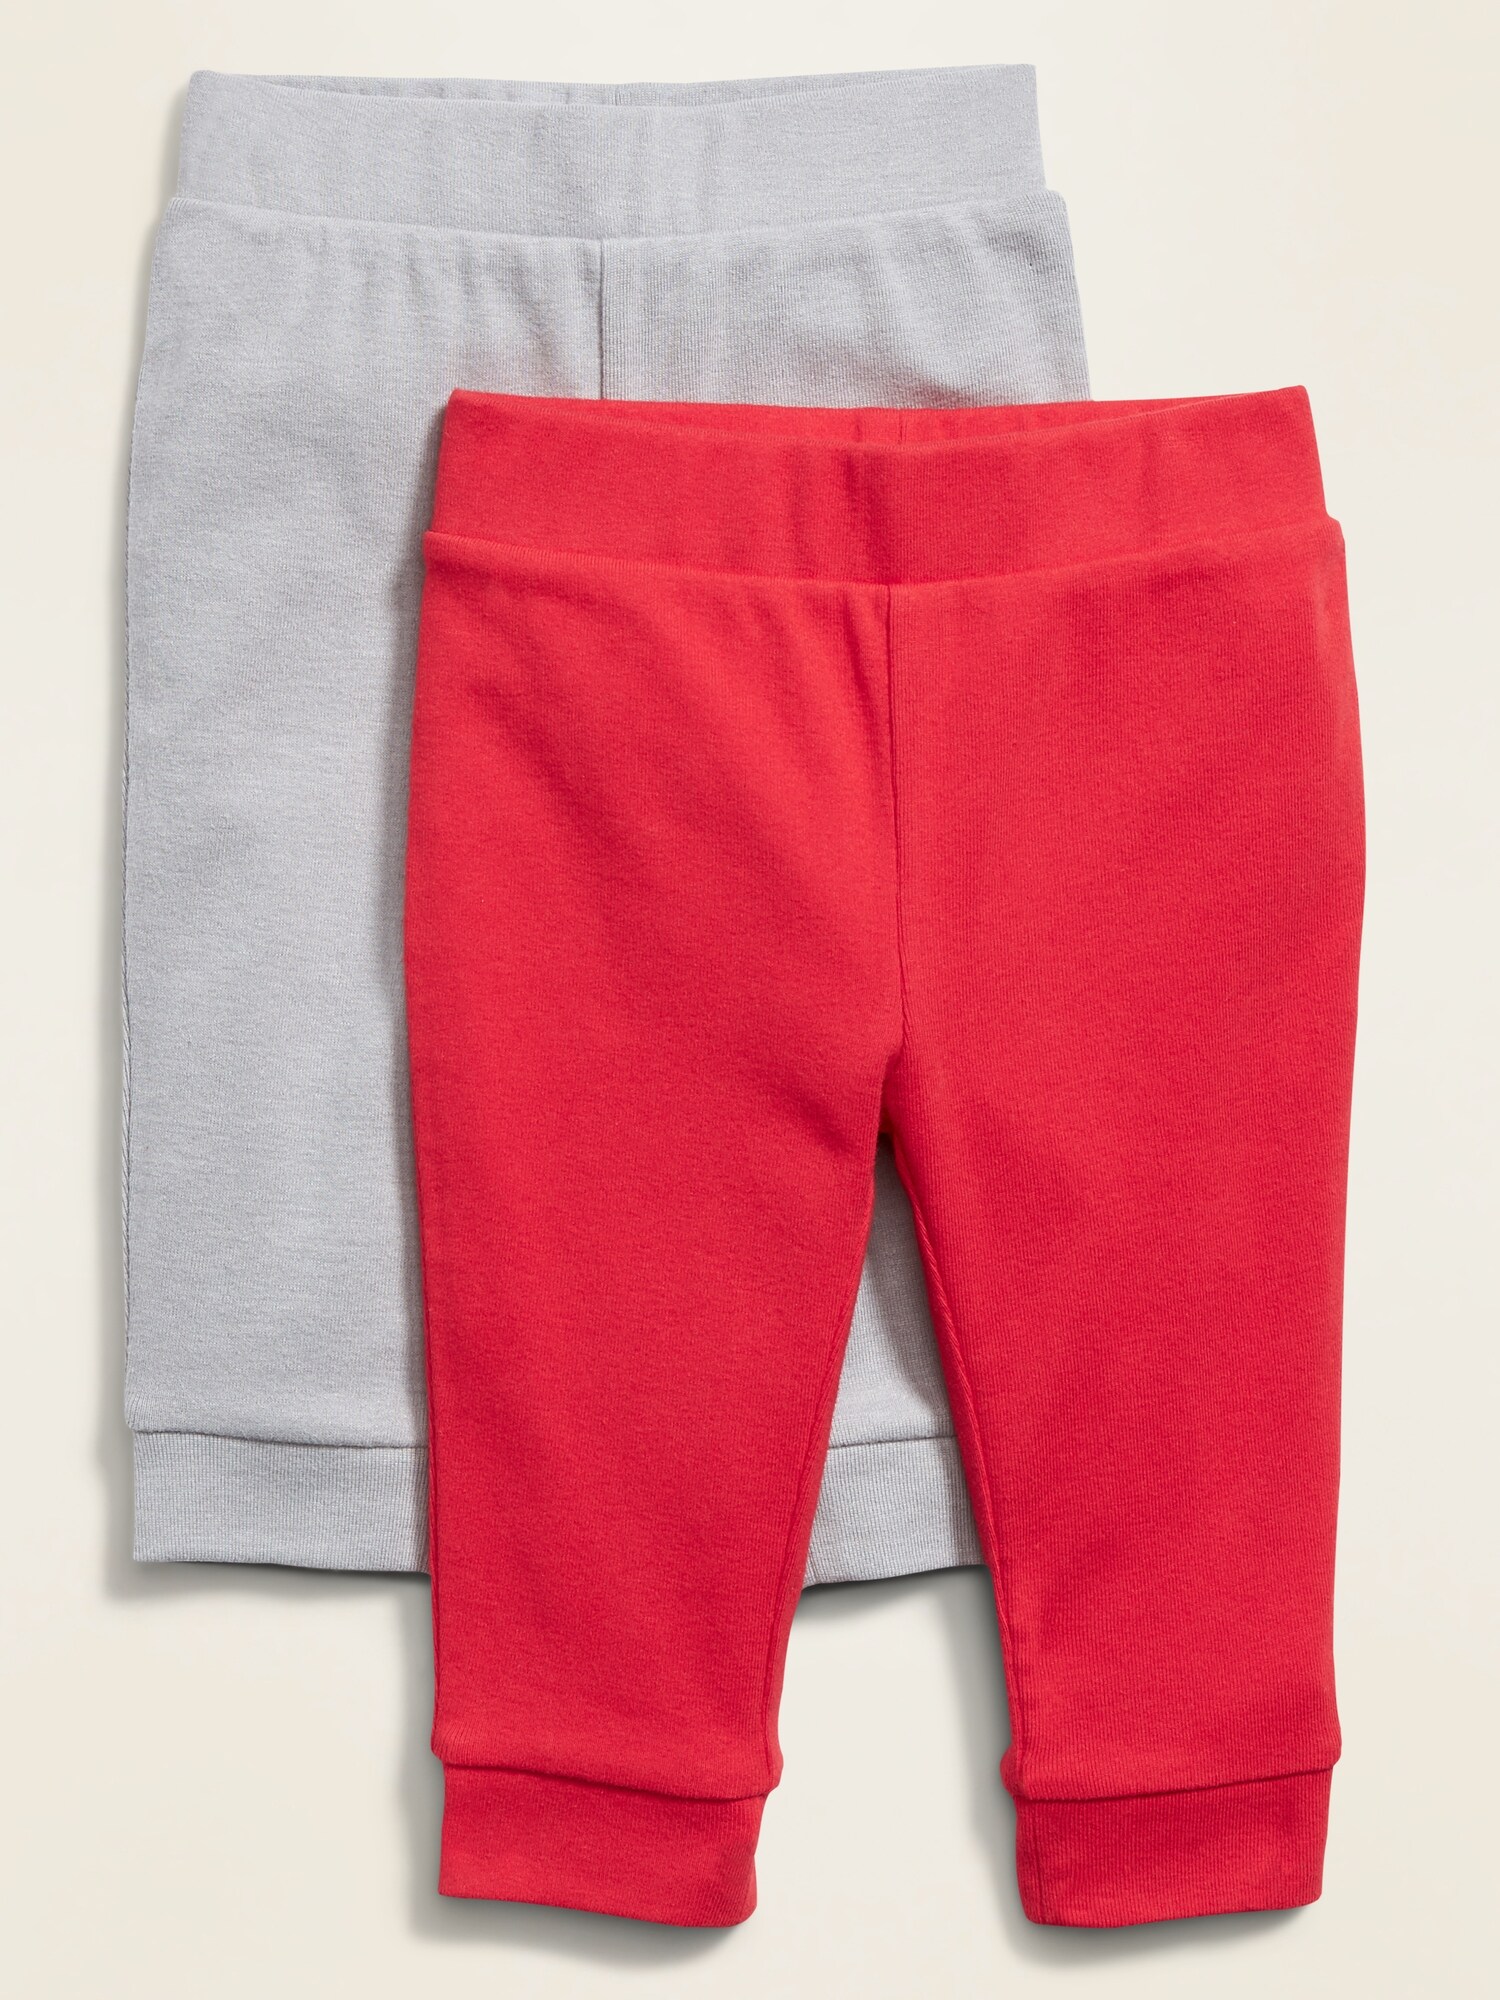 Pack of 2 pairs of short leggings